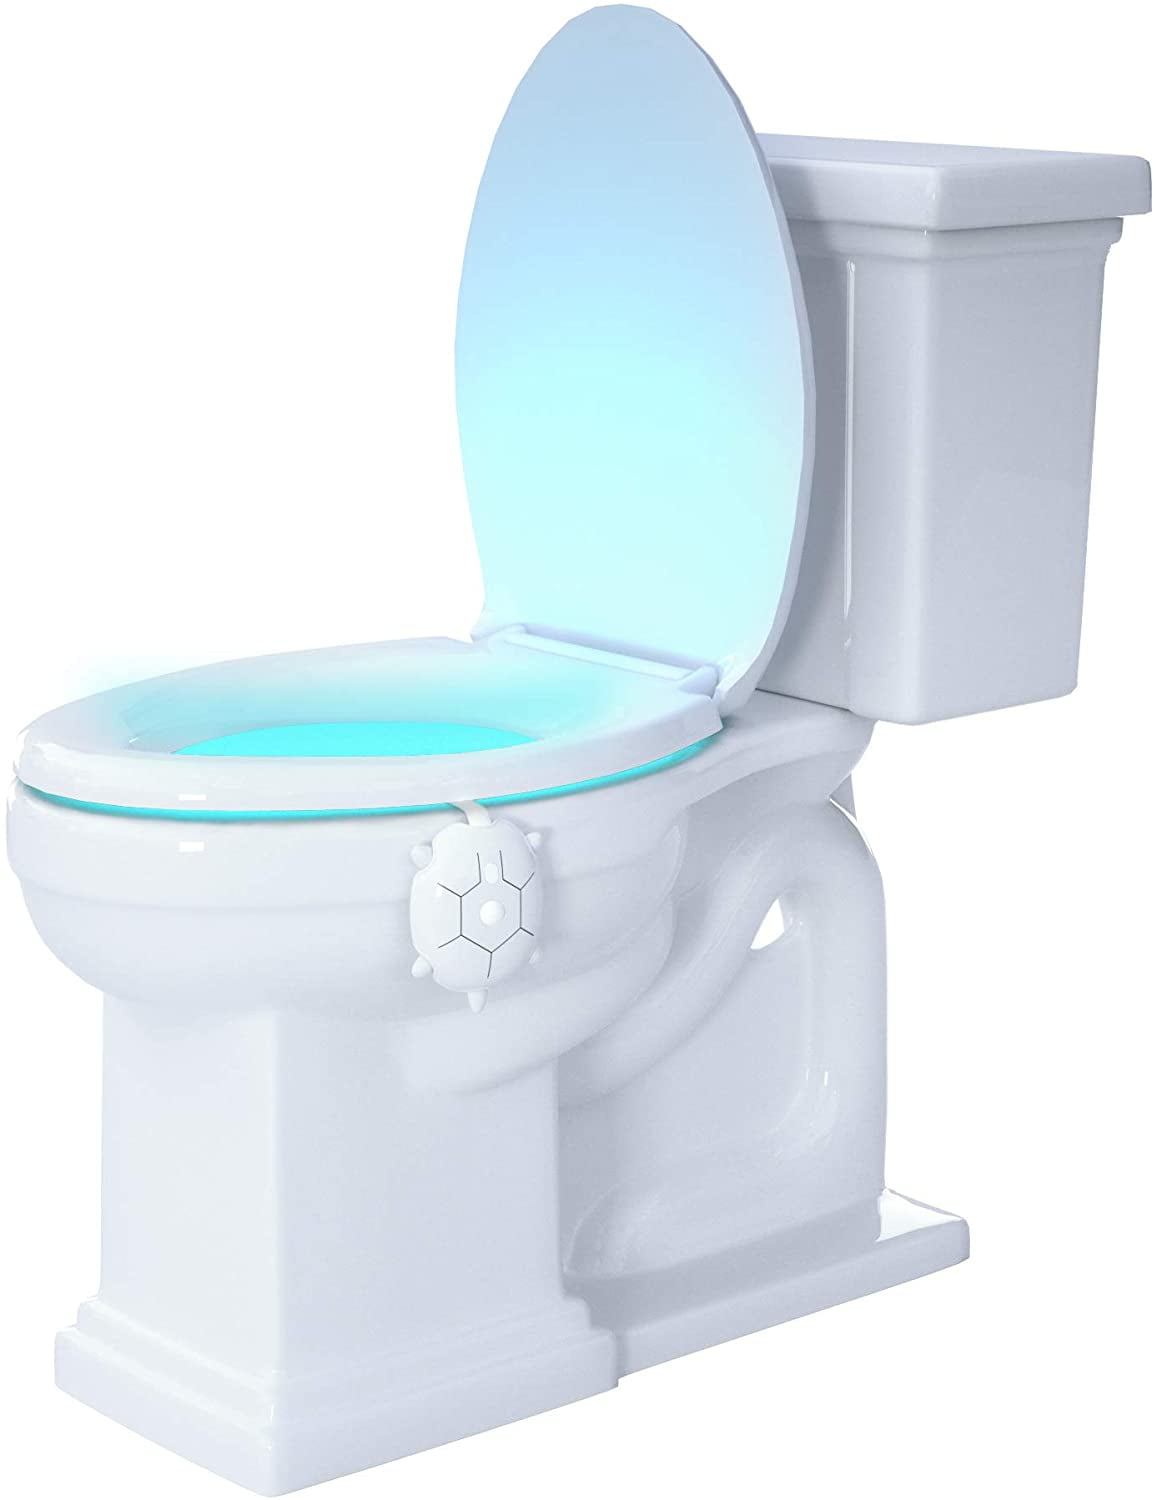 16 Colors Toilet Night Light RGB LED Motion Activated Sensor Bathroom Bowl Seat~ 